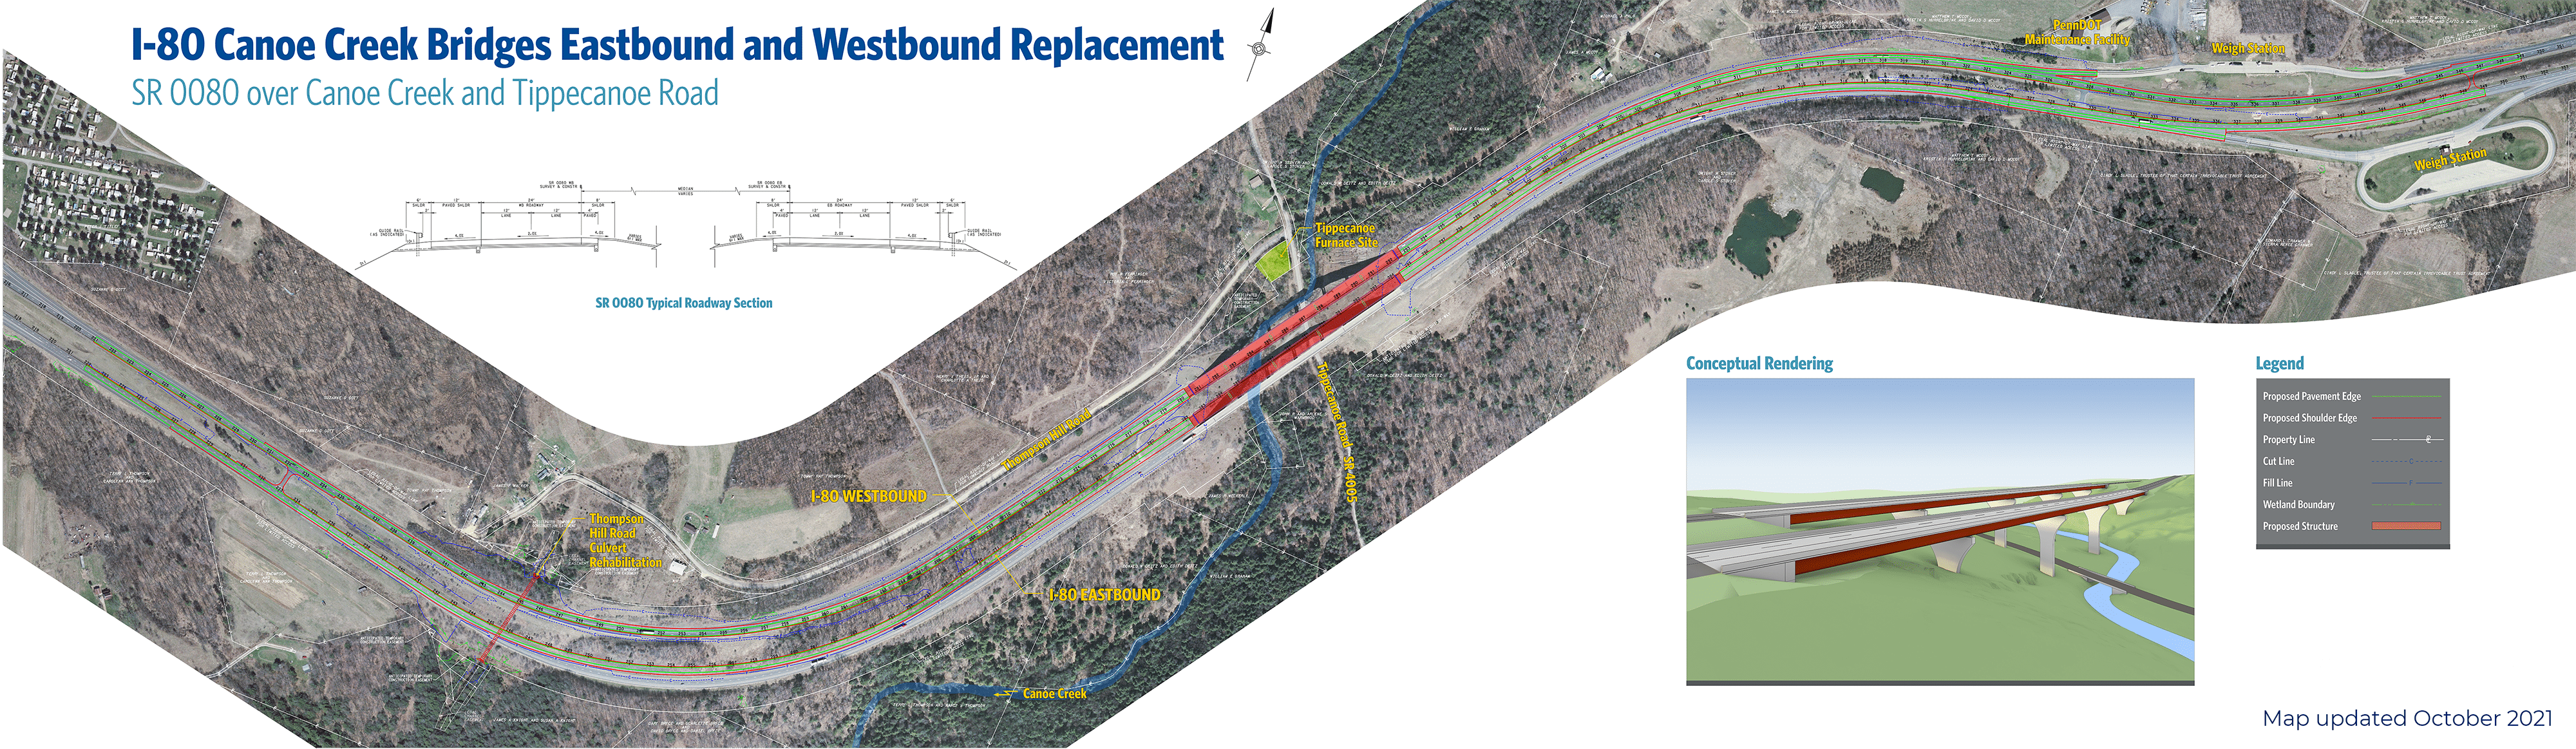 I-80 canoe creek plan sheet map